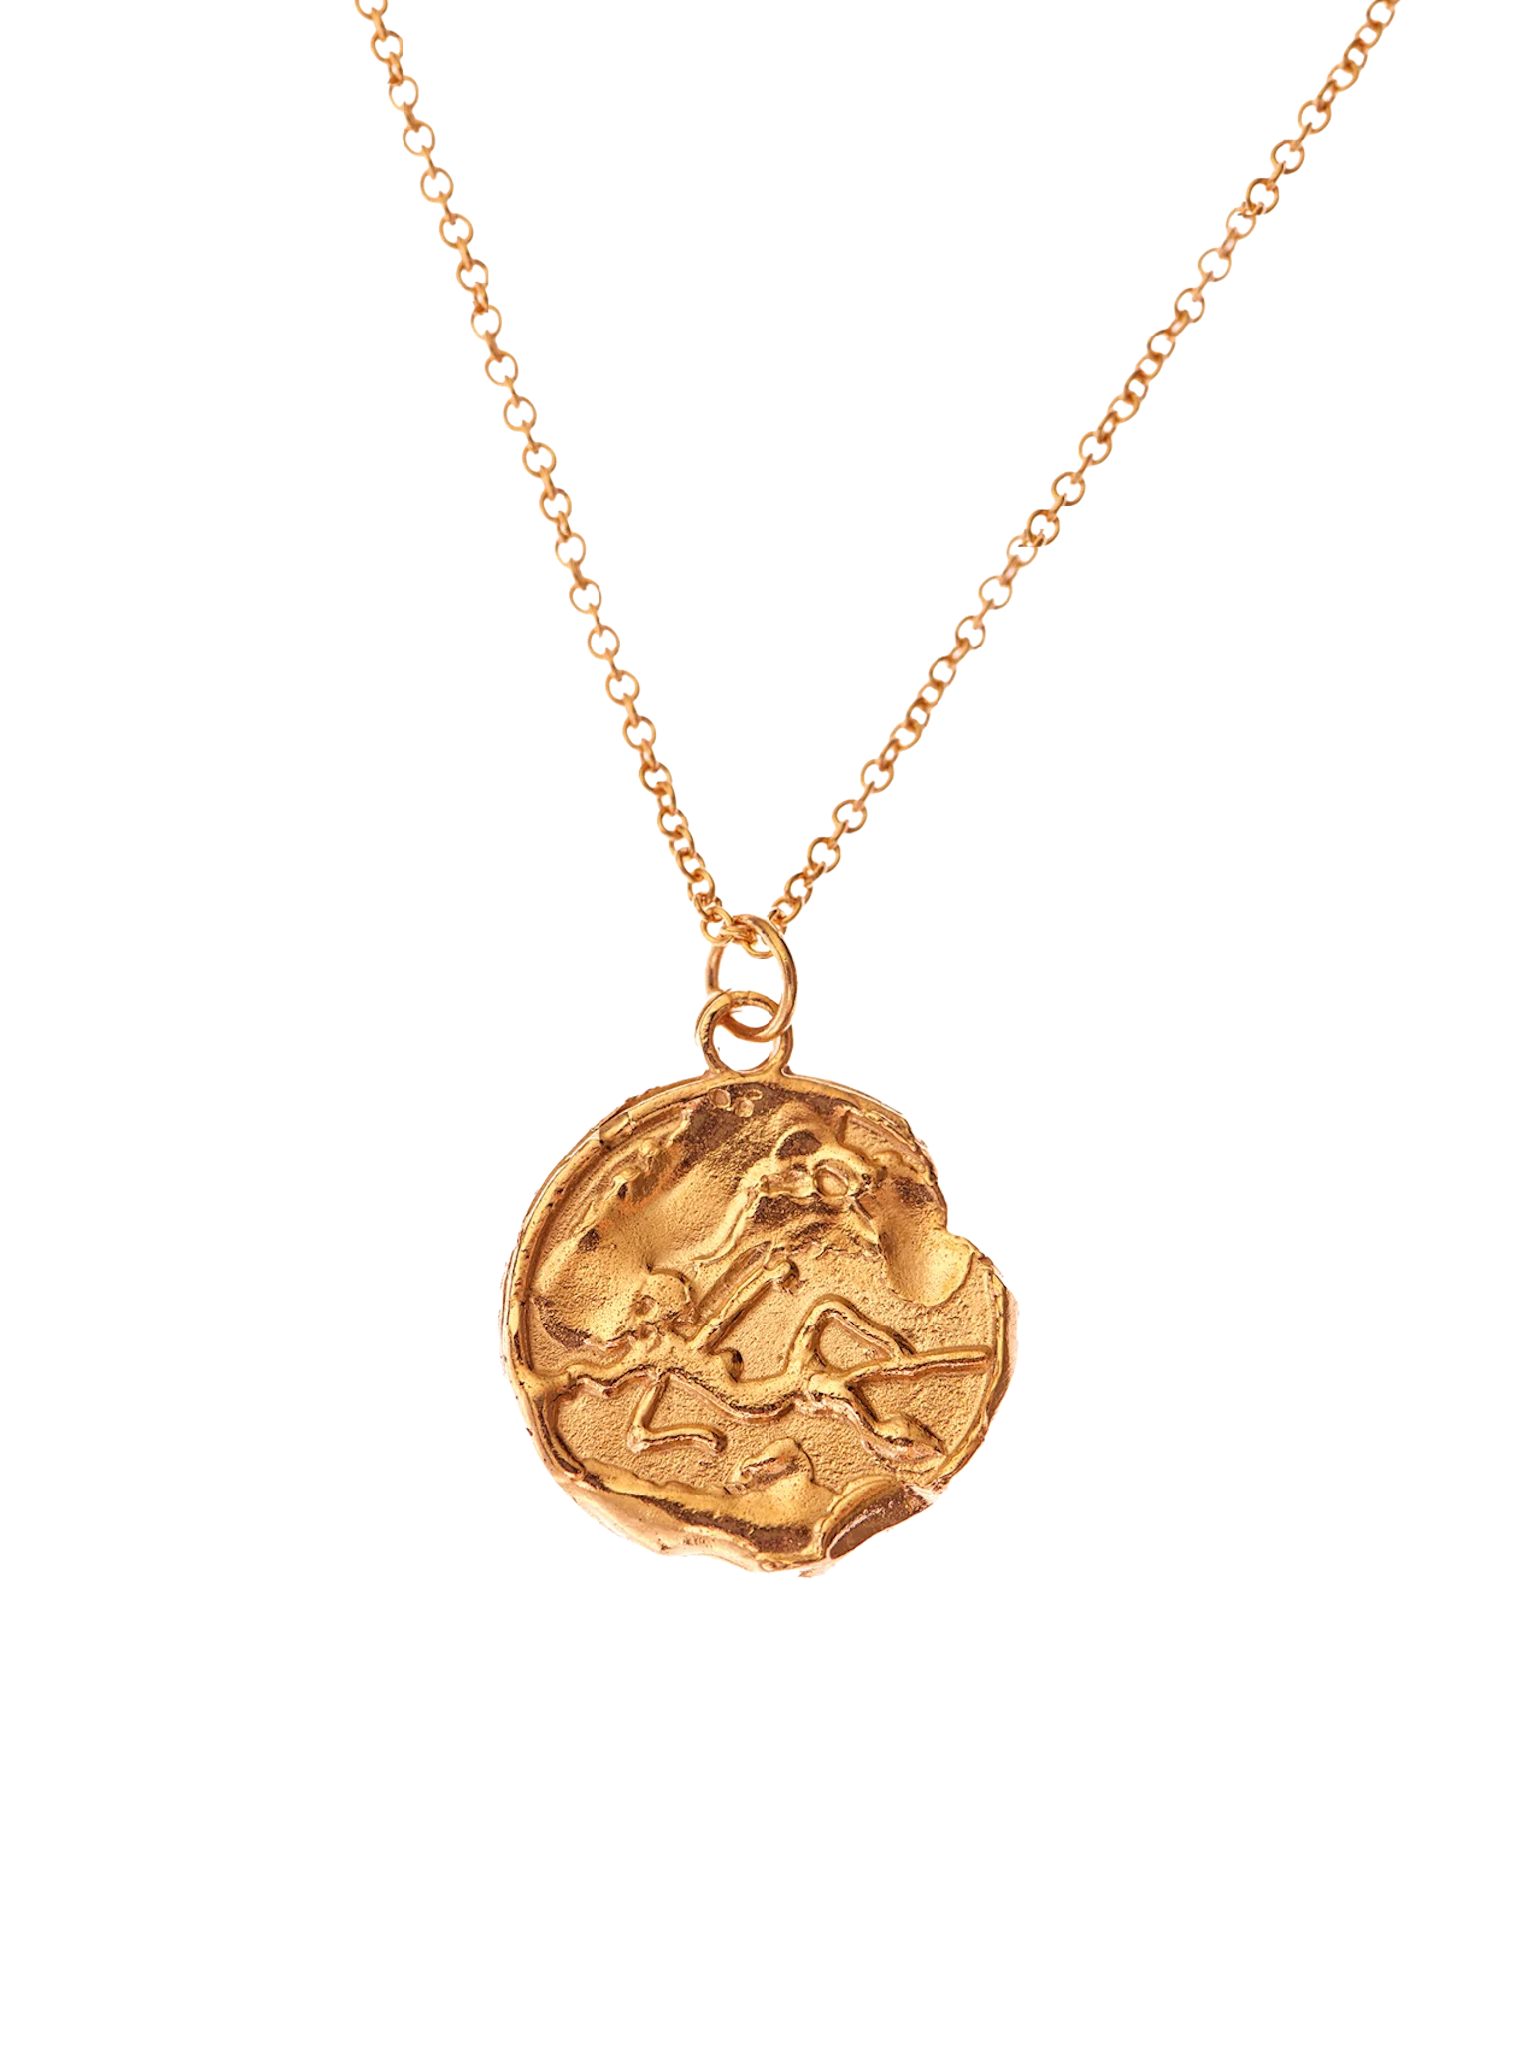 The virgo medallion necklace